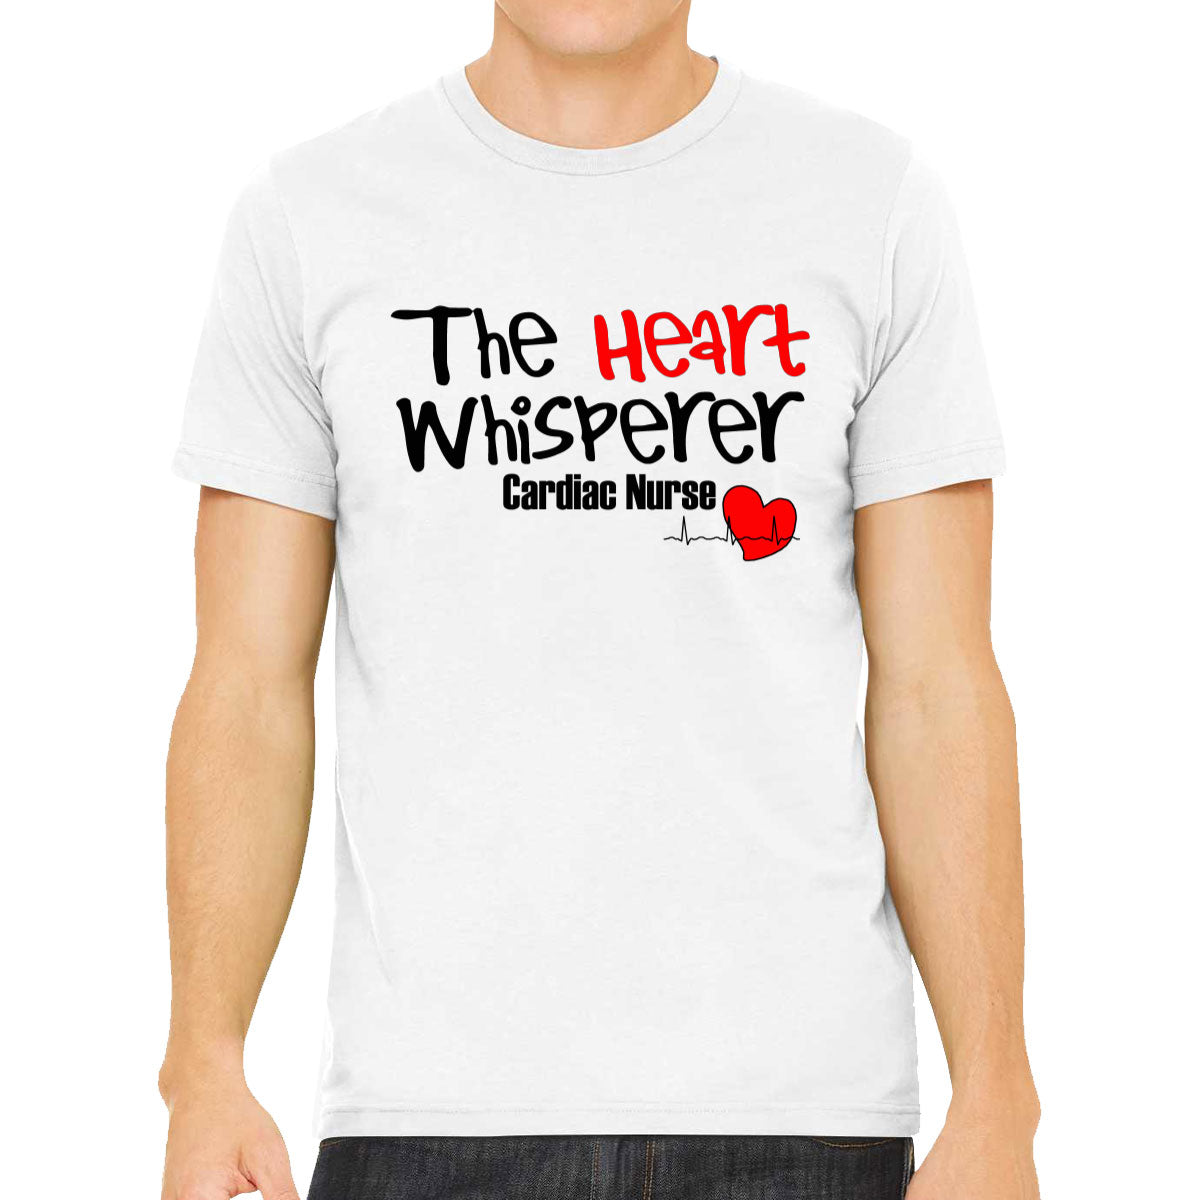 The Heart Whisperer Cardiac Nurse Men's T-shirt